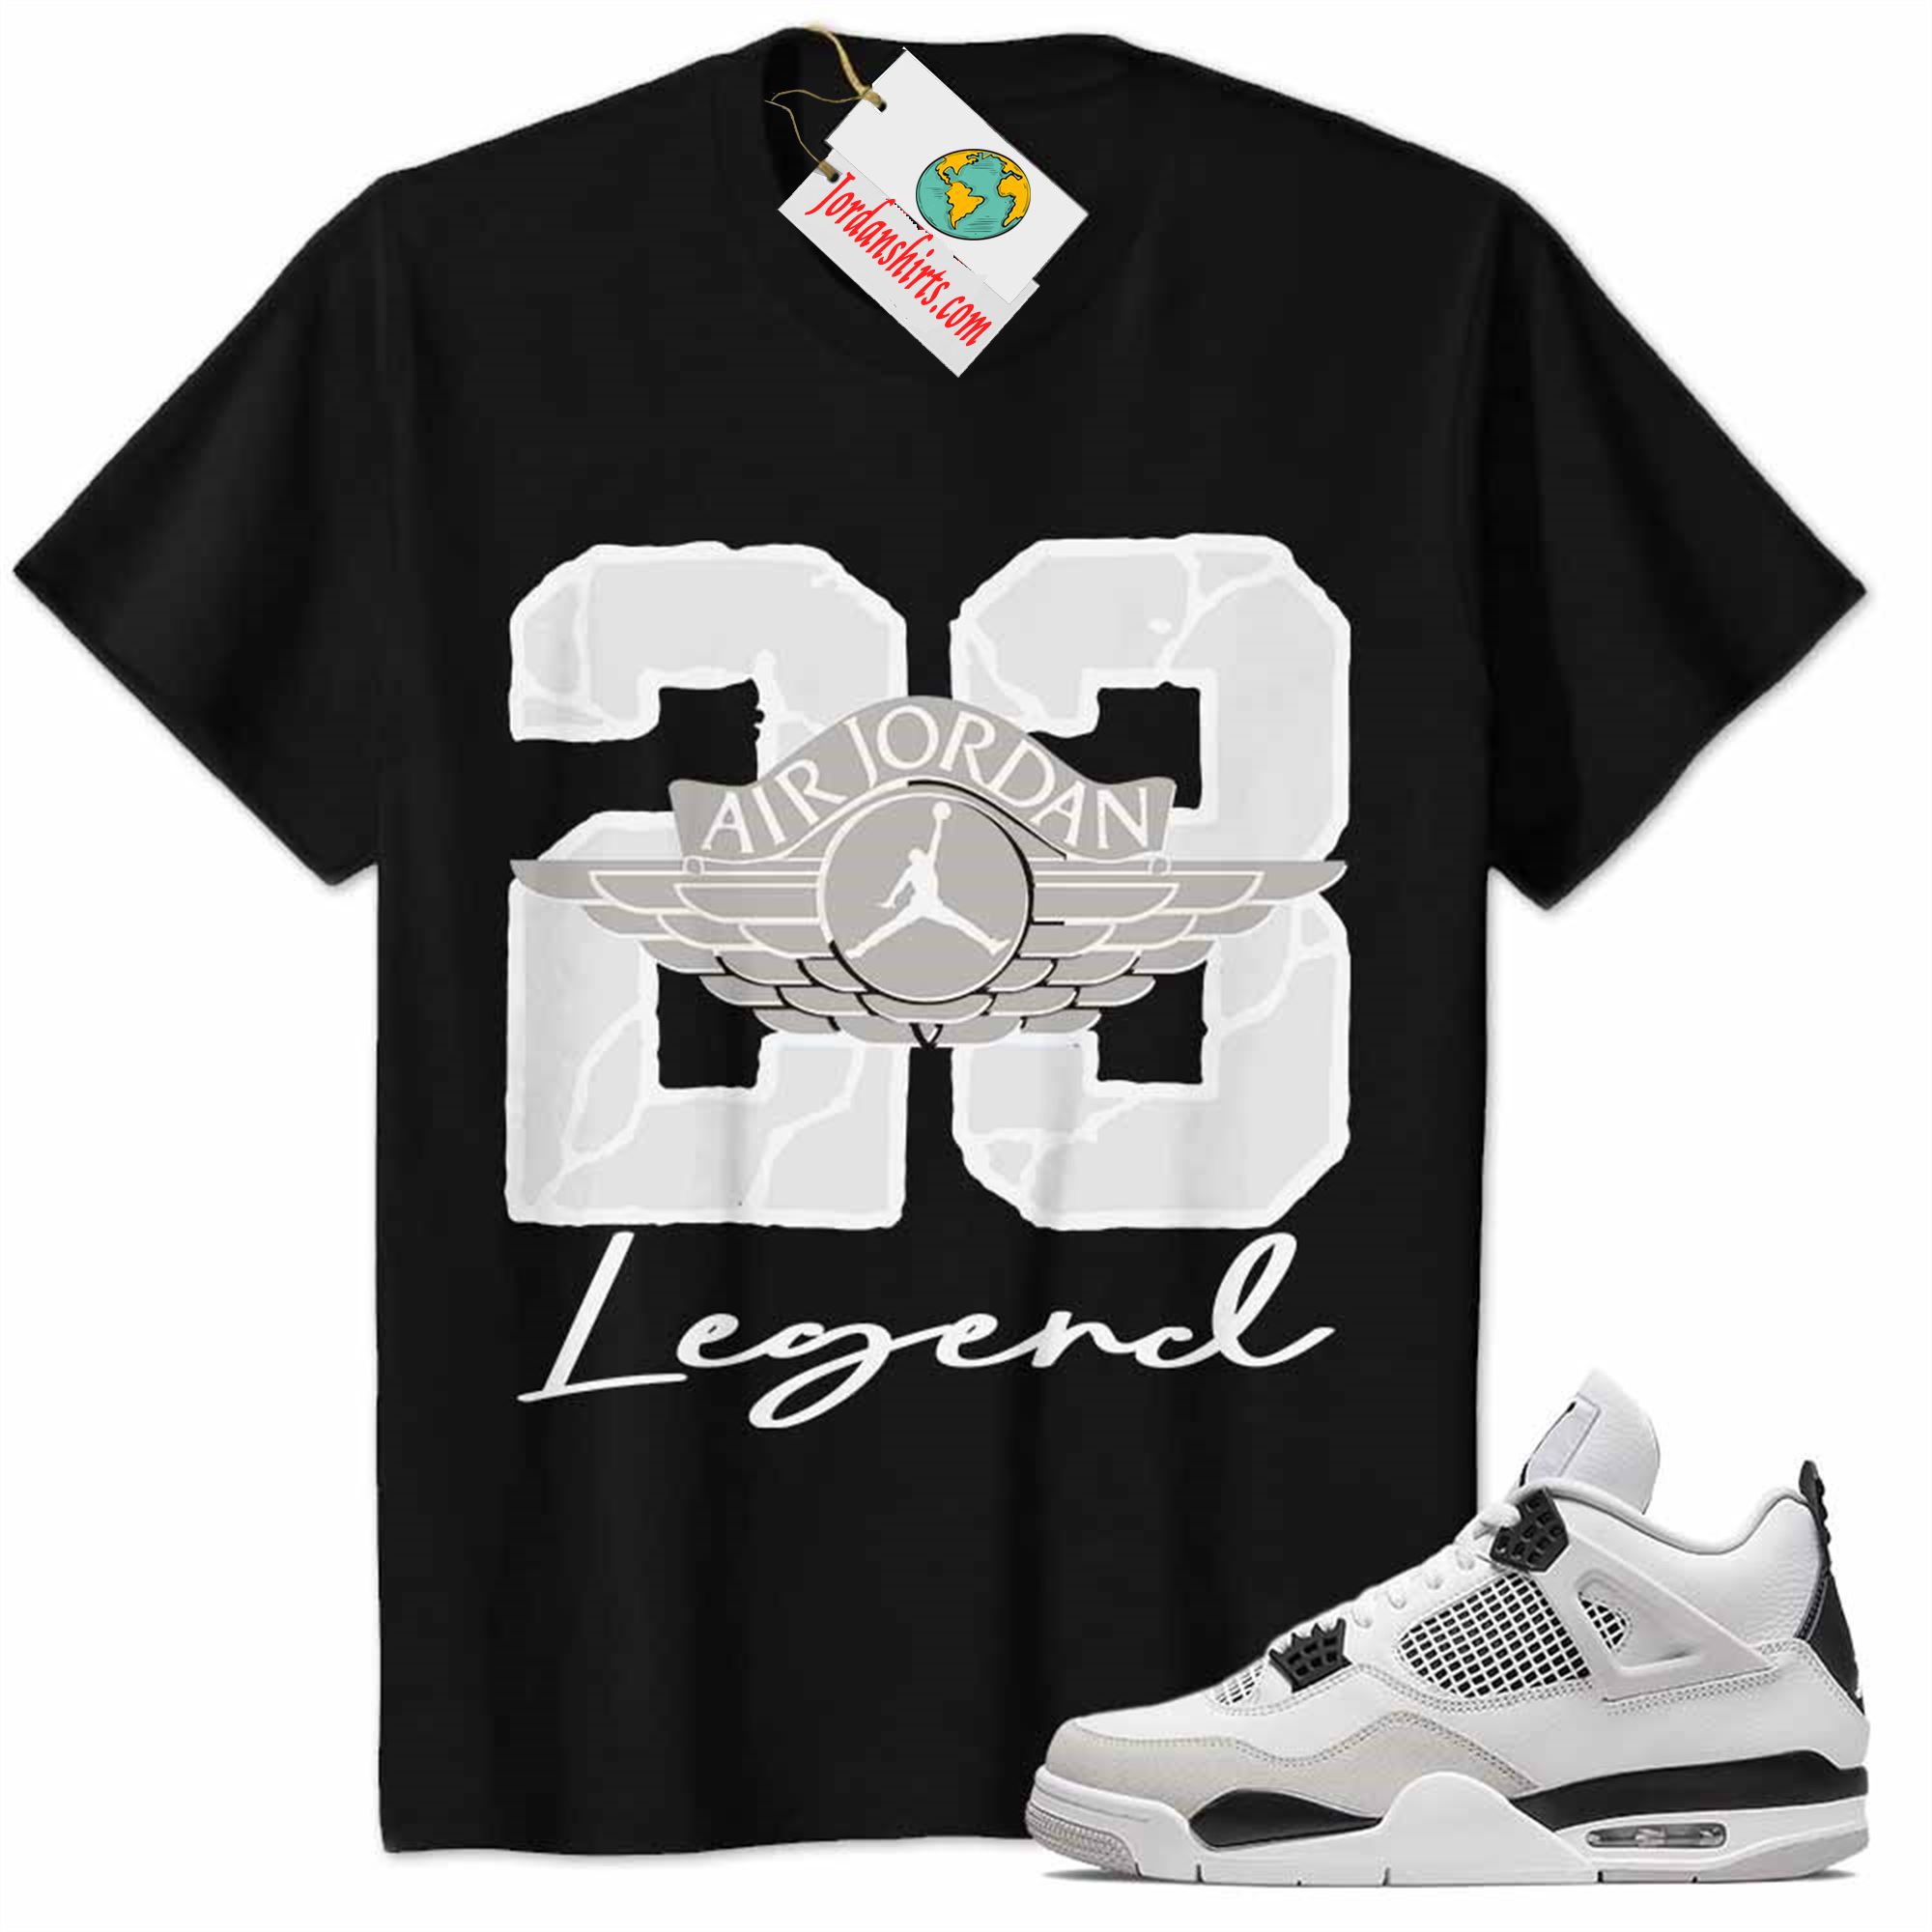 Jordan 4 Shirt, Jordan 4 Military Black Shirt Shirt 23 Jordan Number Legend Black Plus Size Up To 5xl